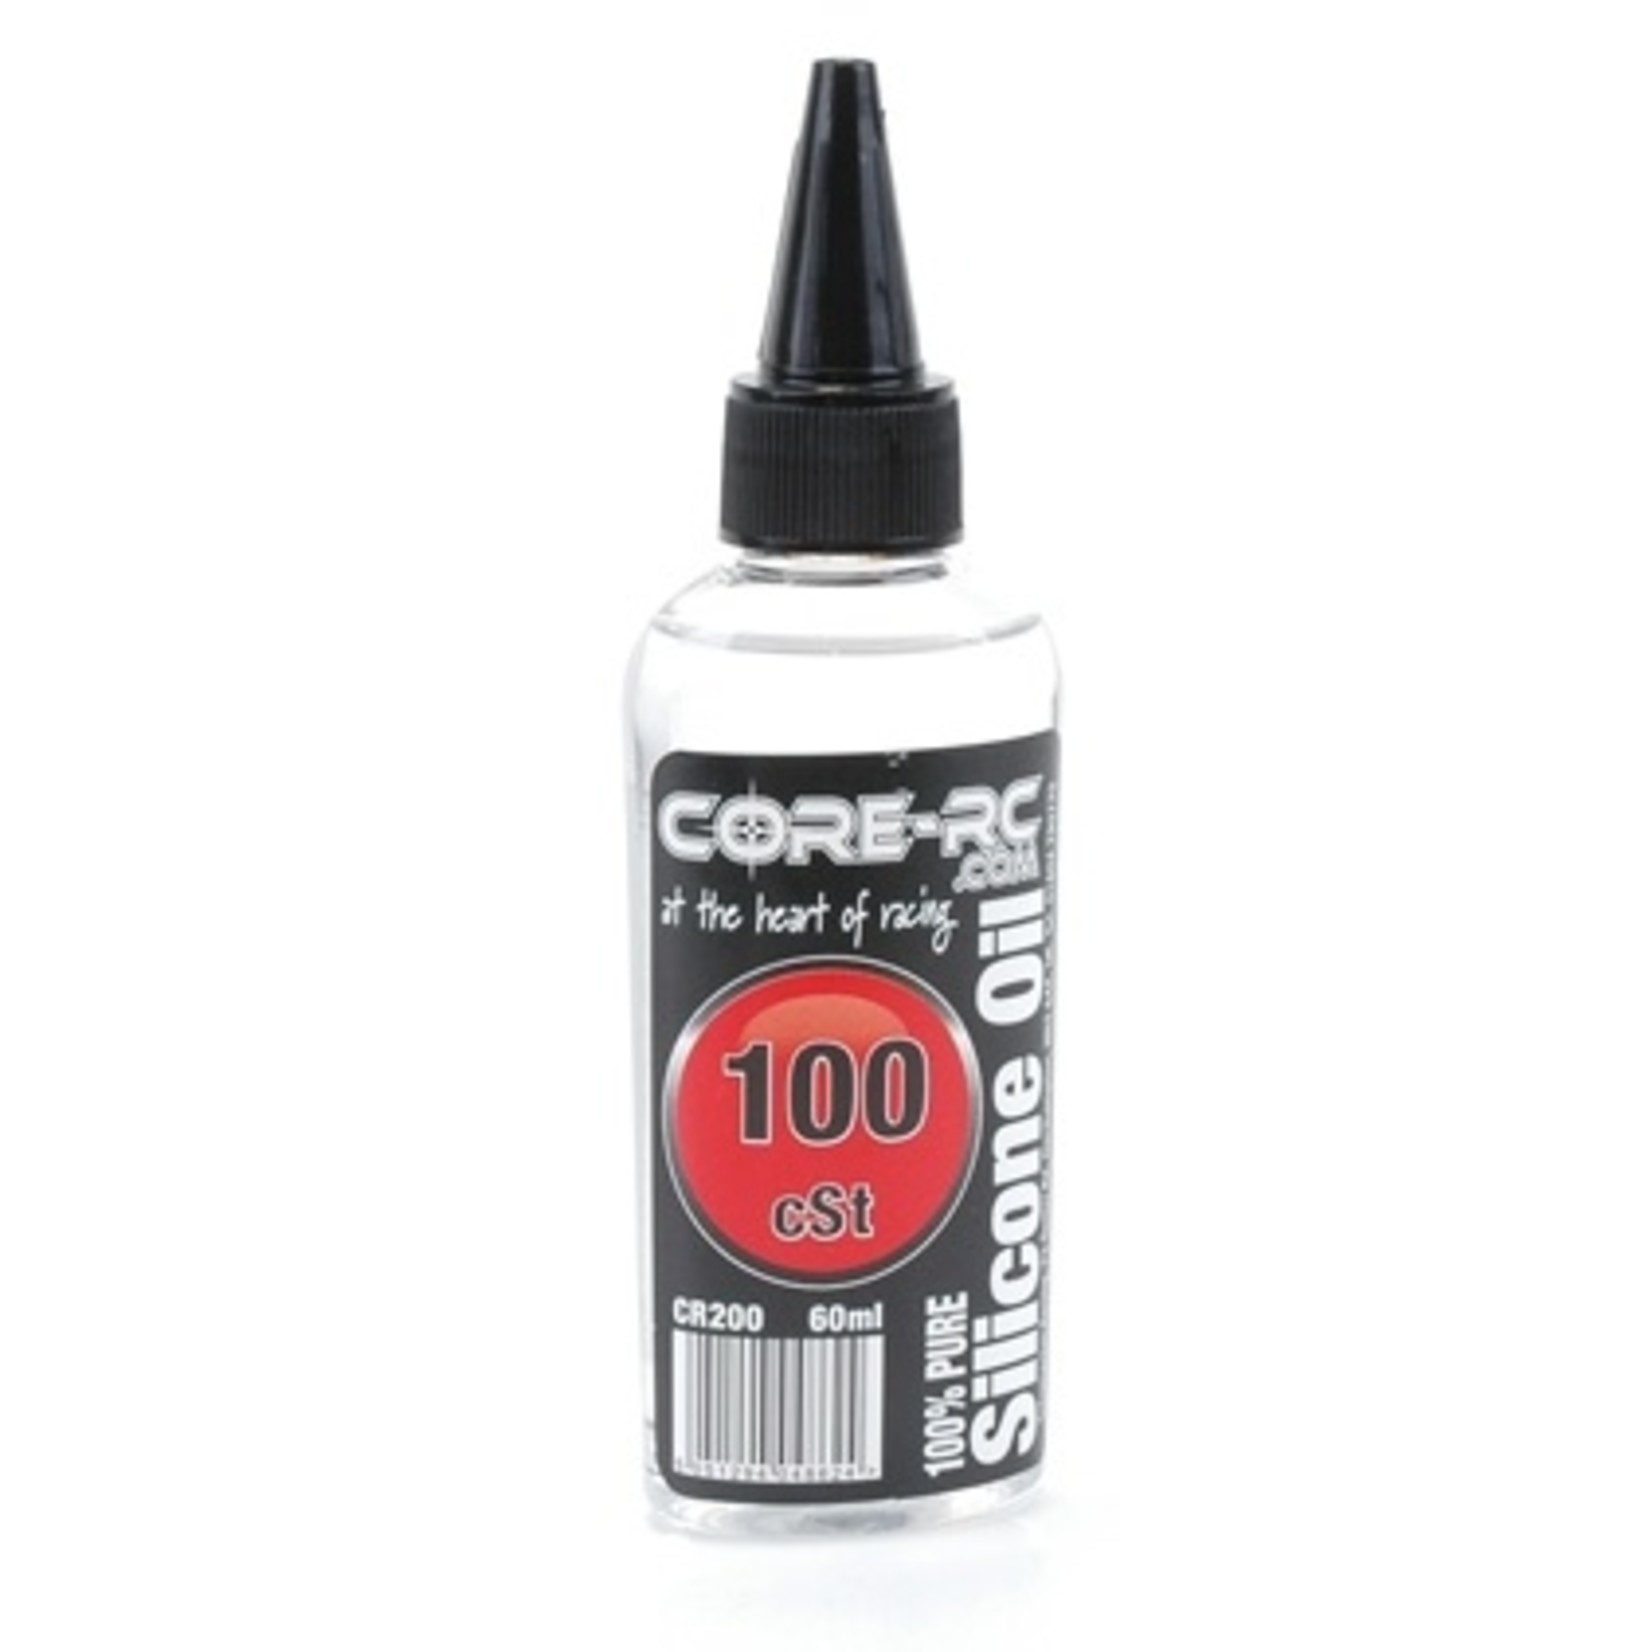 Core RC CORE RC Silicone Oil - 100cSt - 60ml